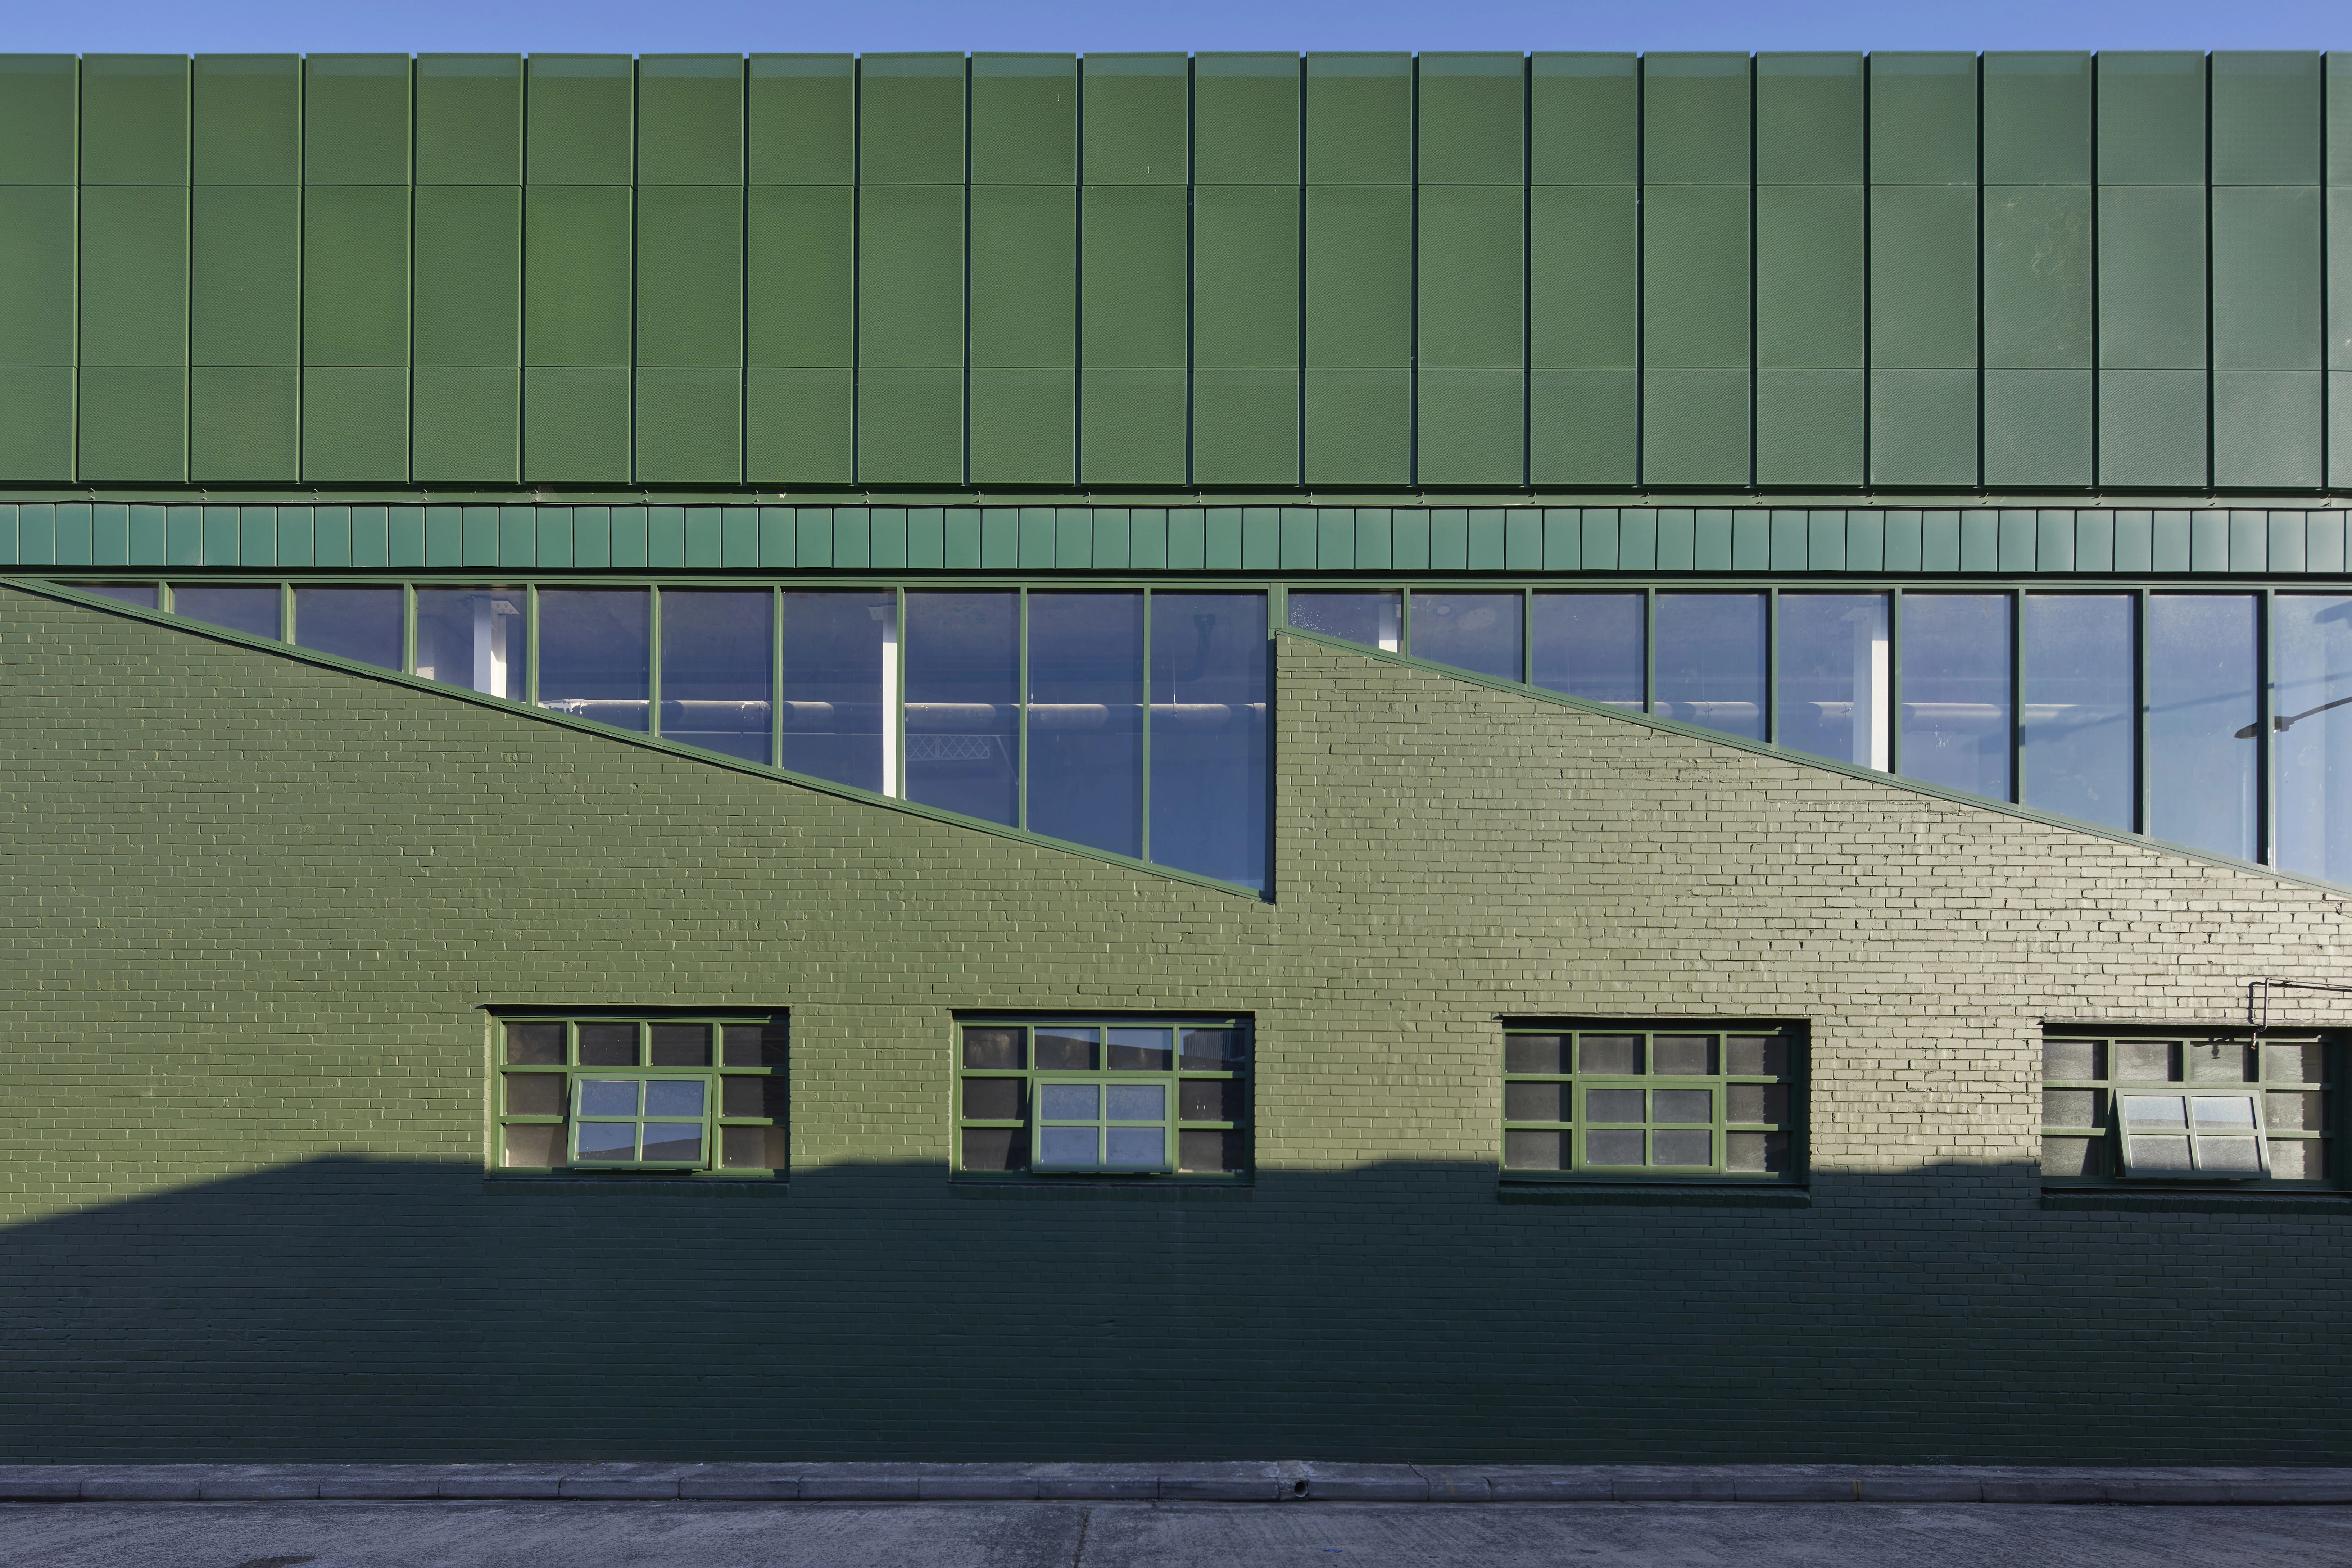 Green industrial factory building